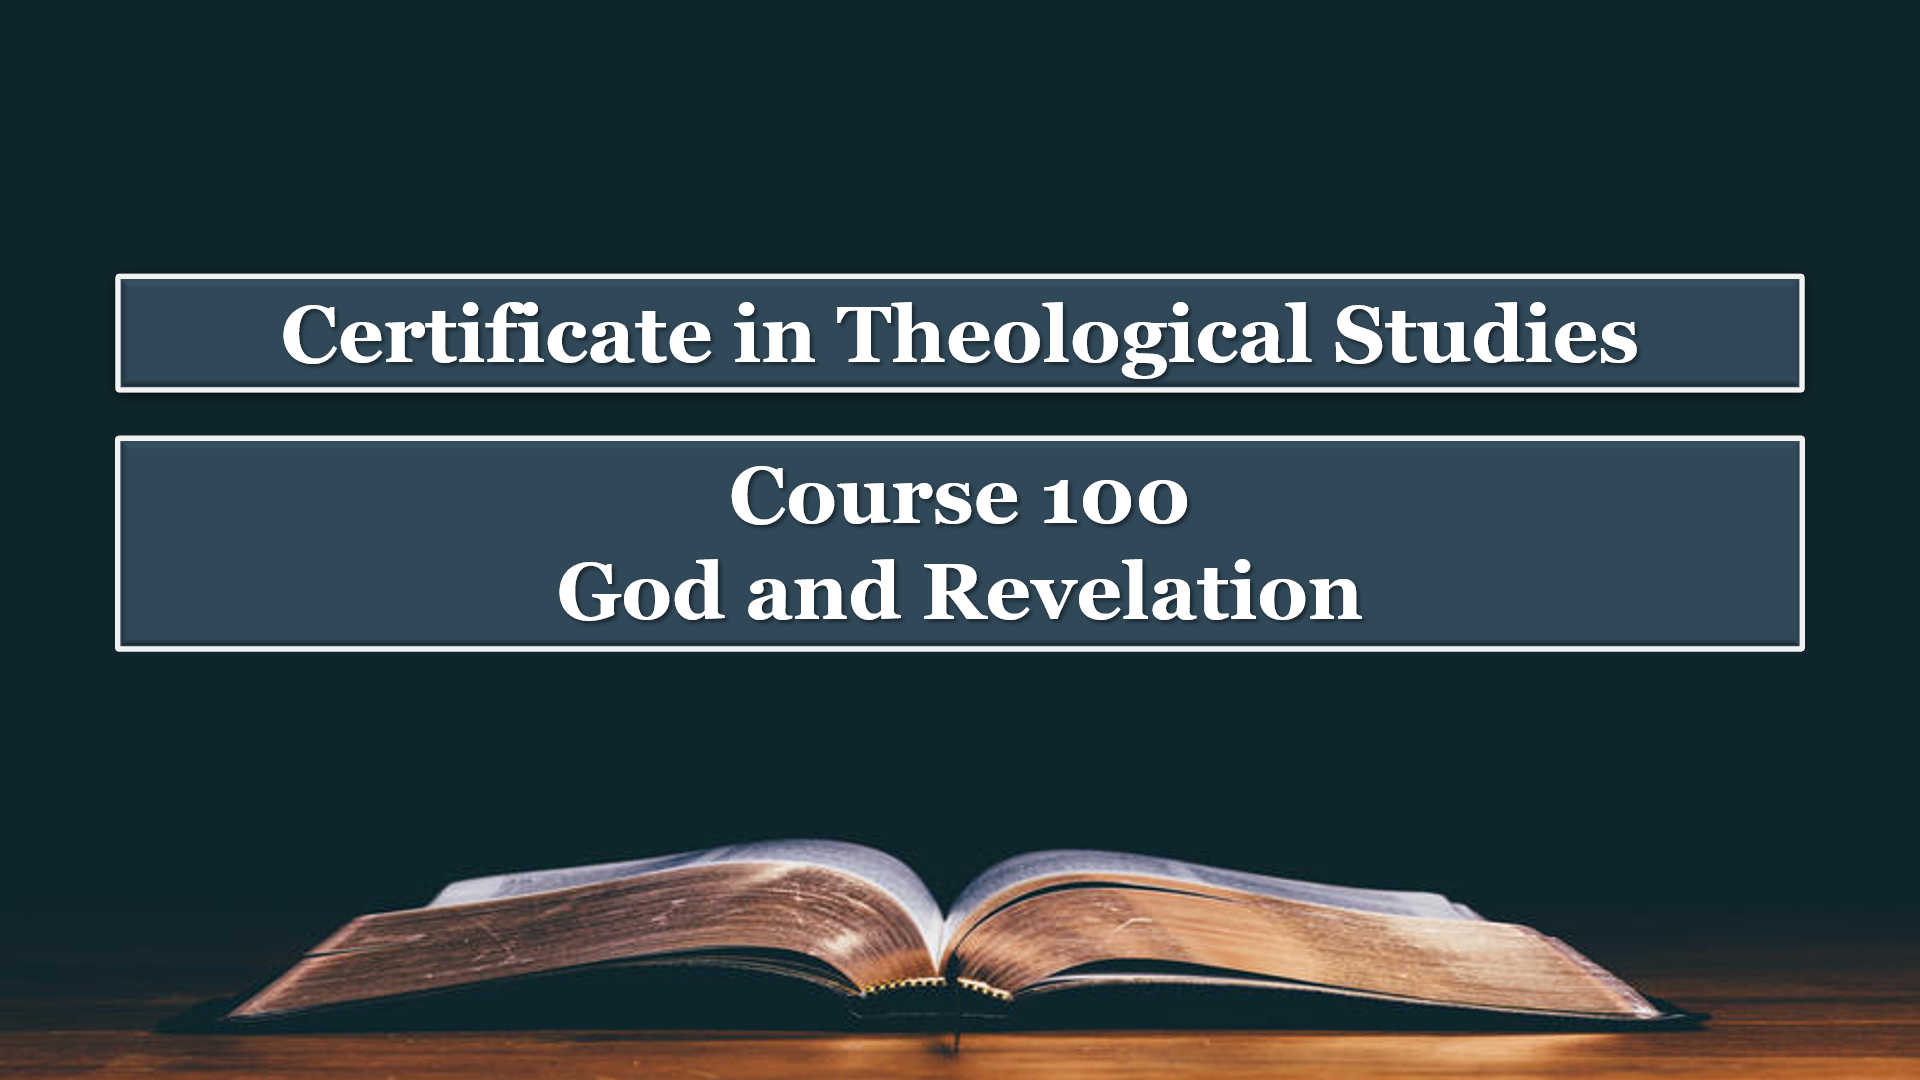 Course 100: God and Revelation